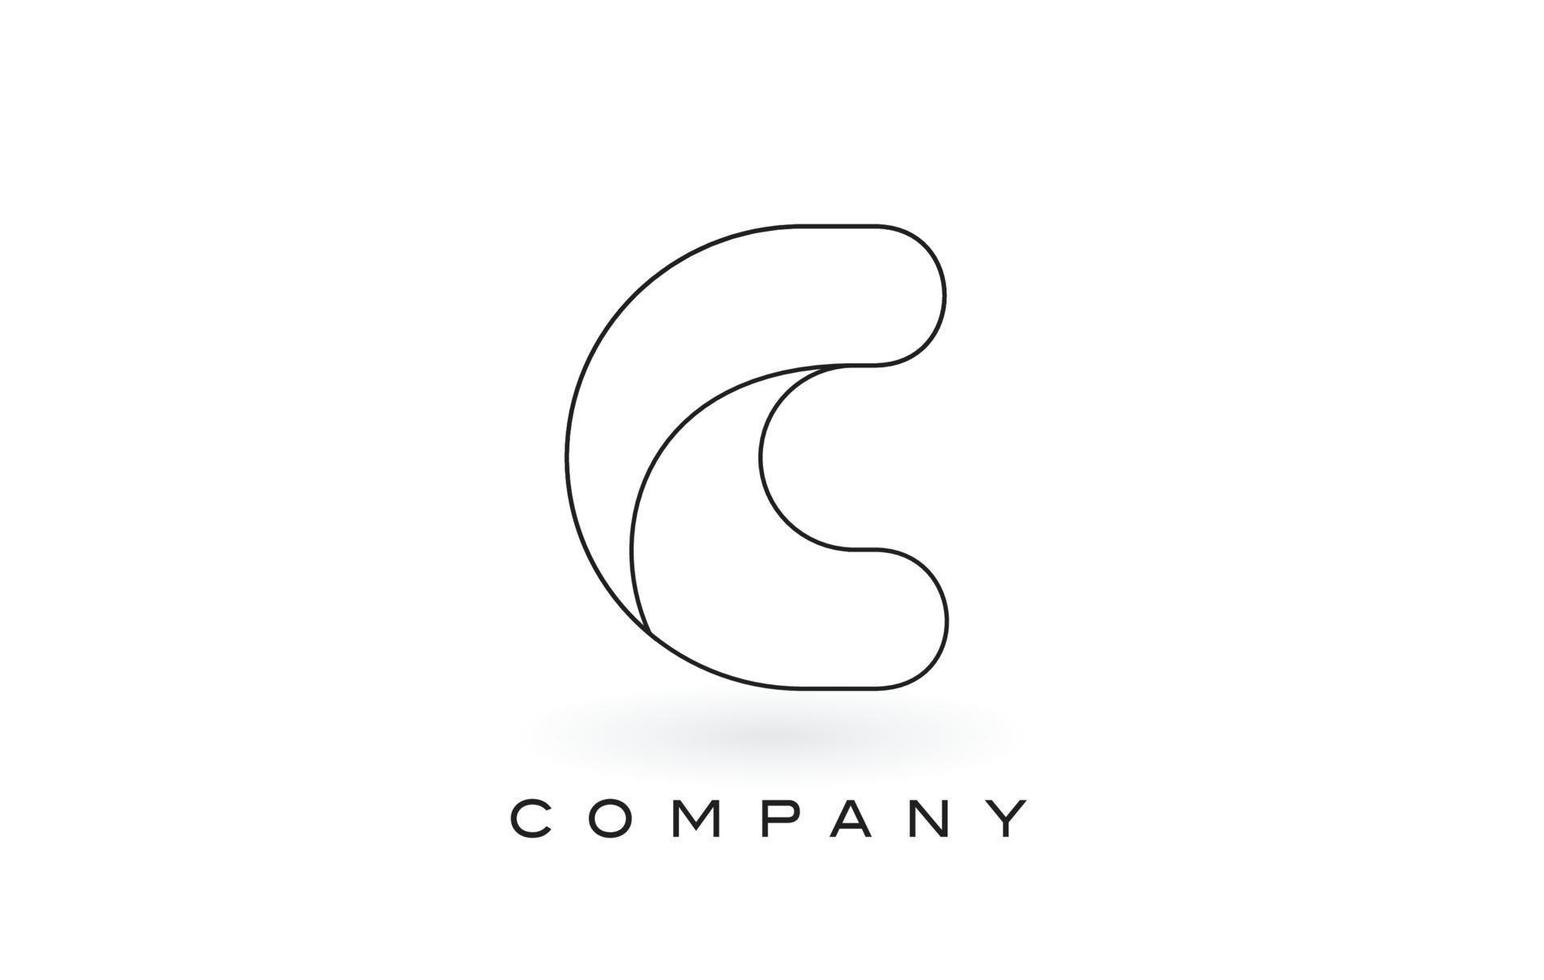 c logotipo da letra do monograma com contorno preto fino do contorno do monograma. vetor de design de carta na moda moderna.